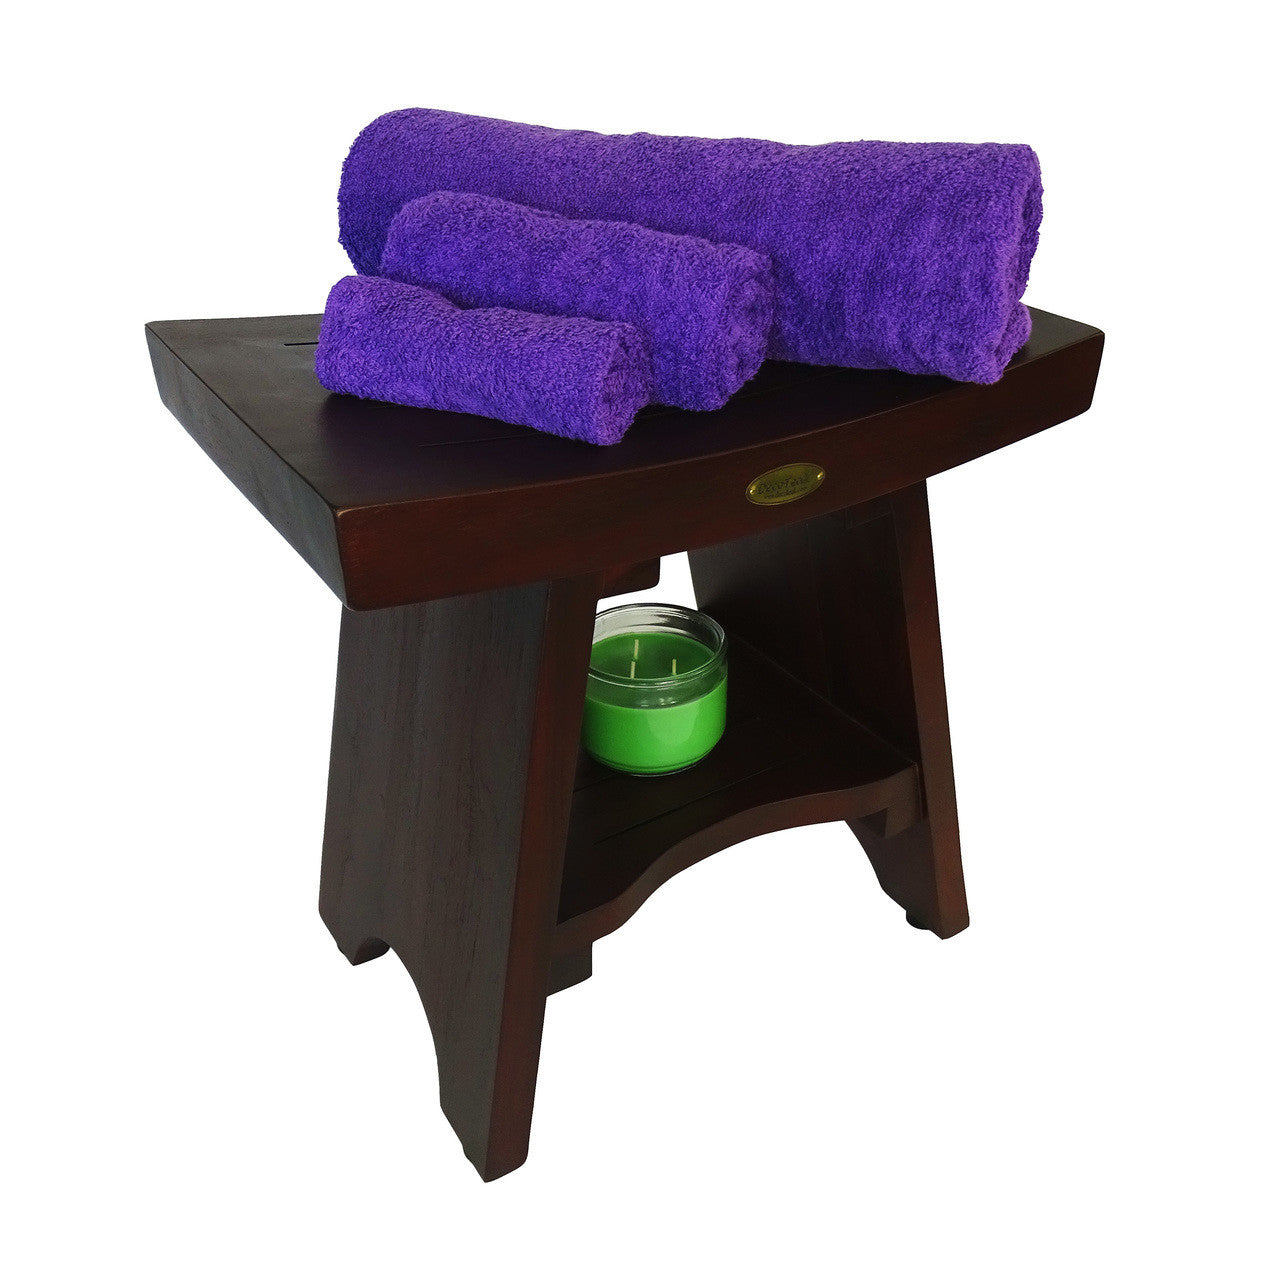 DecoTeak® Serenity® 18" Teak Wood Shower Bench with Shelf in Woodland Brown Finish